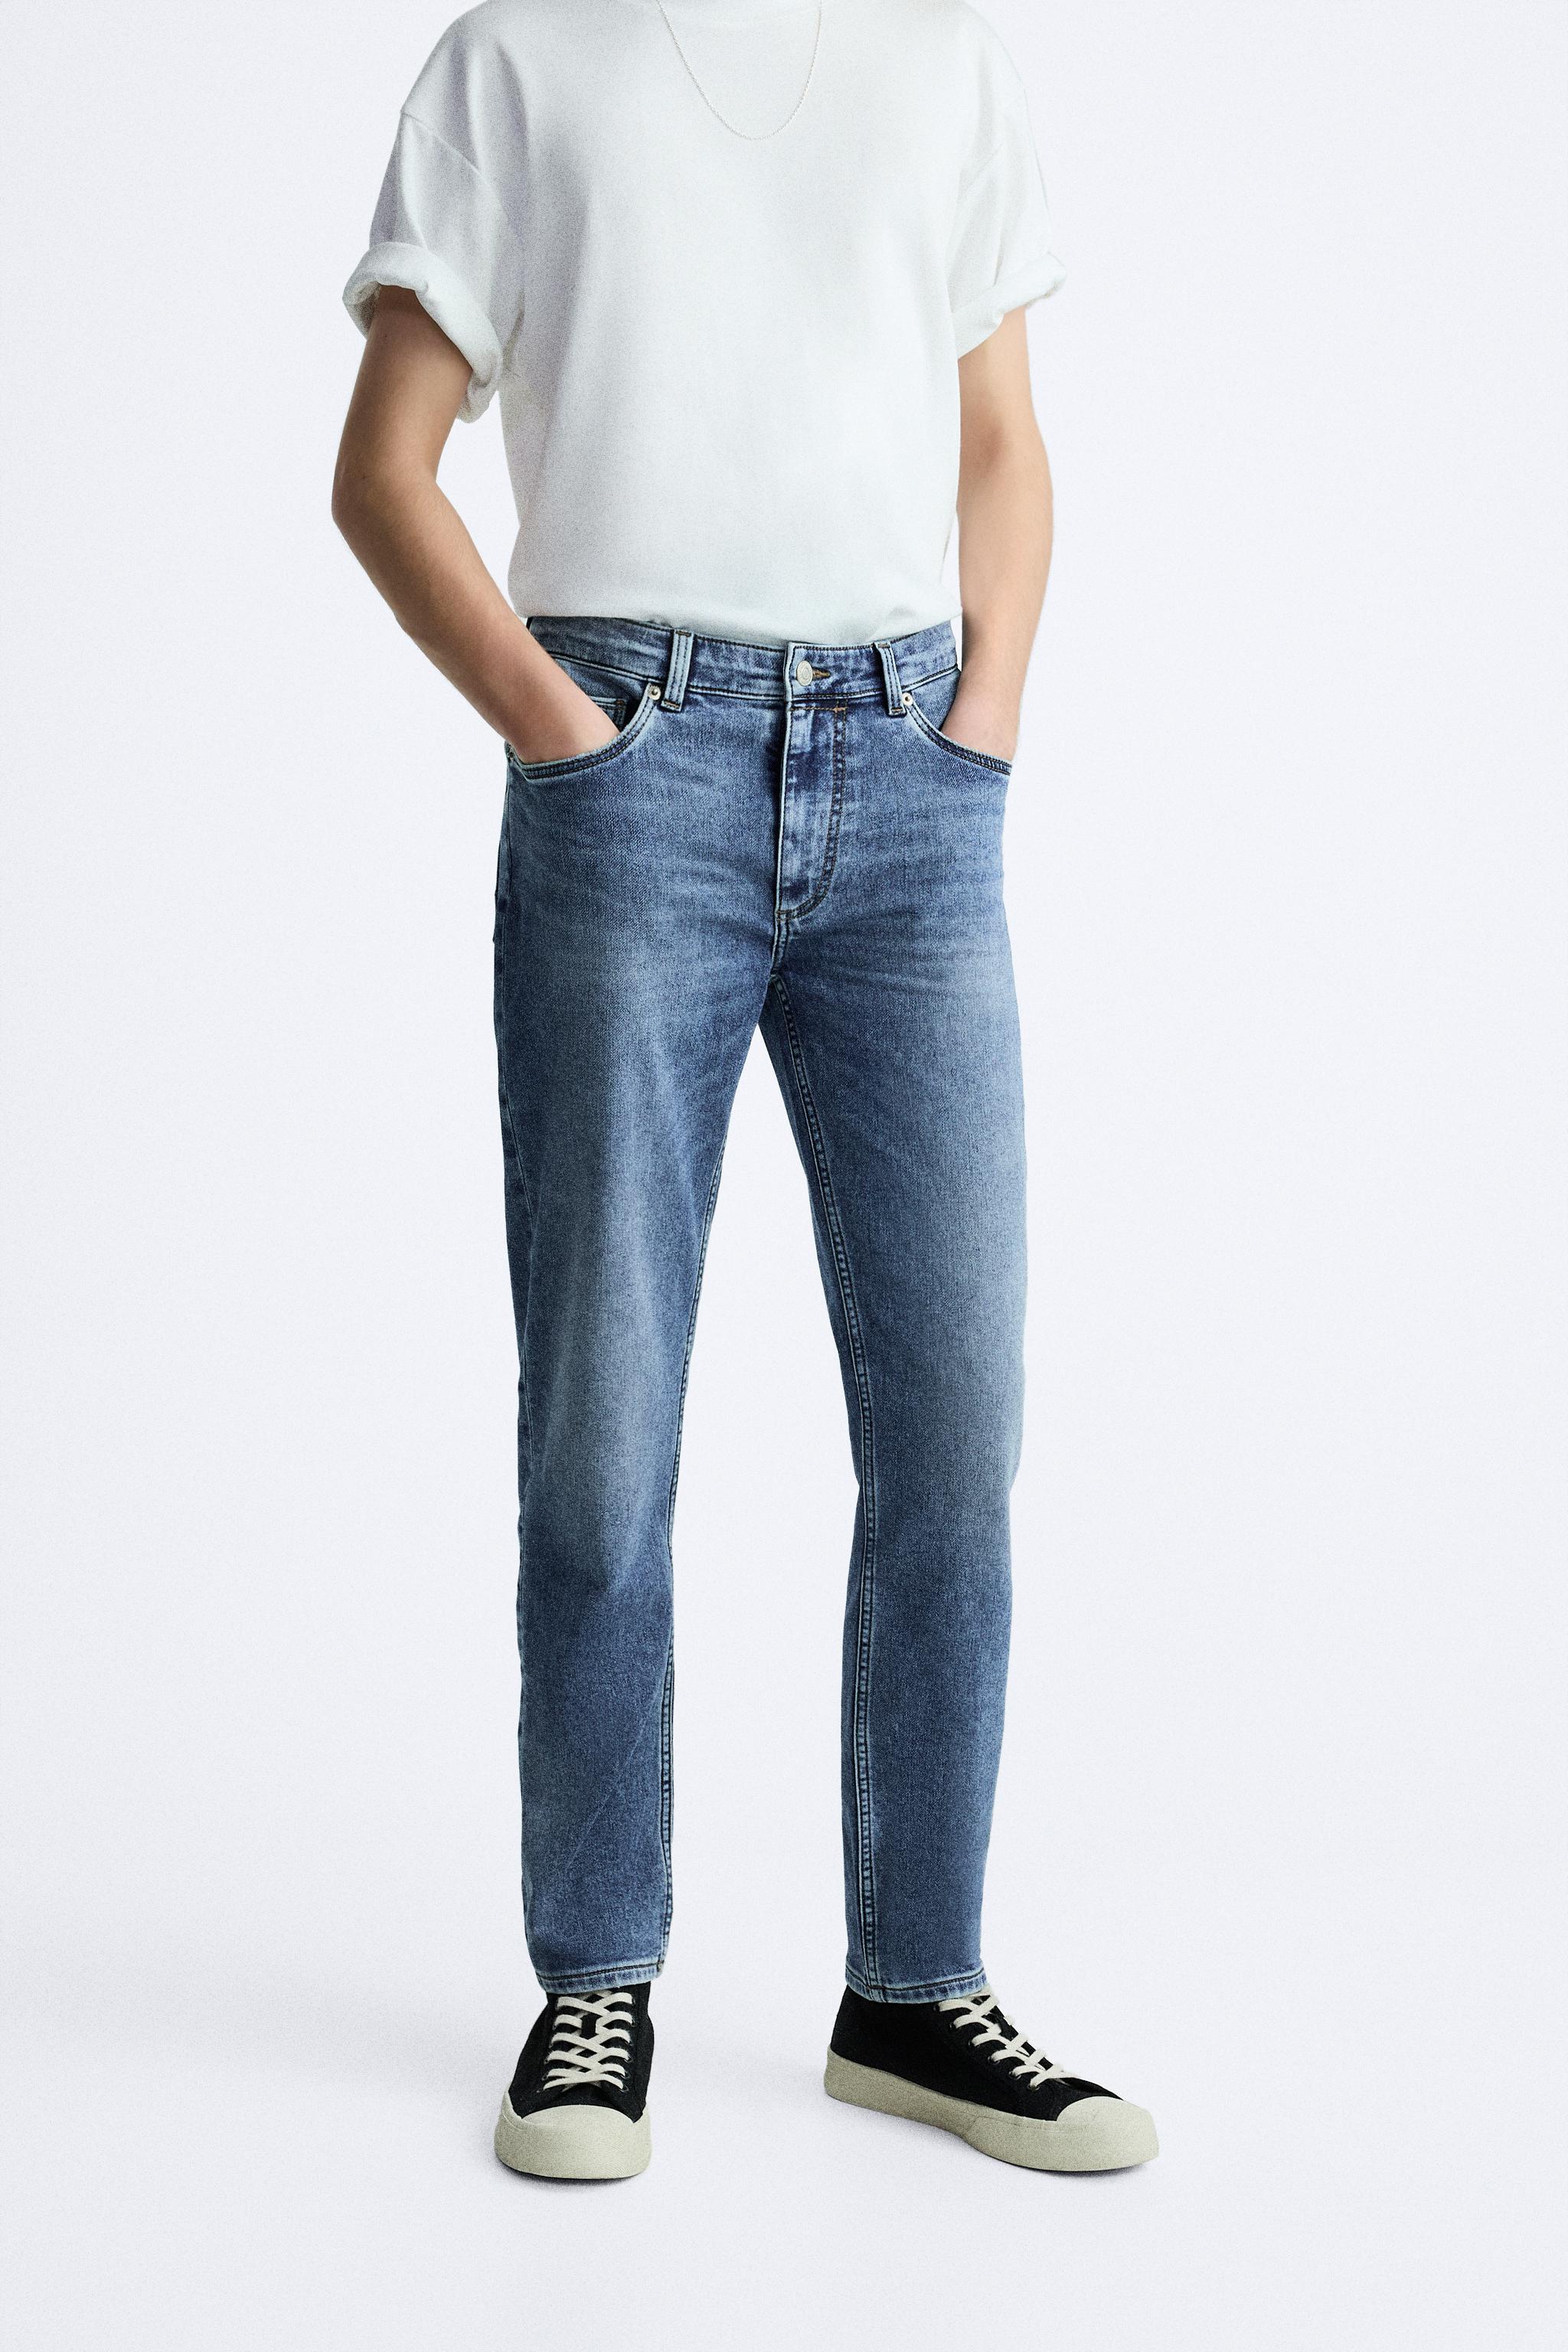 Zara Angel Men Black Jeans - Buy Zara Angel Men Black Jeans Online at Best  Prices in India